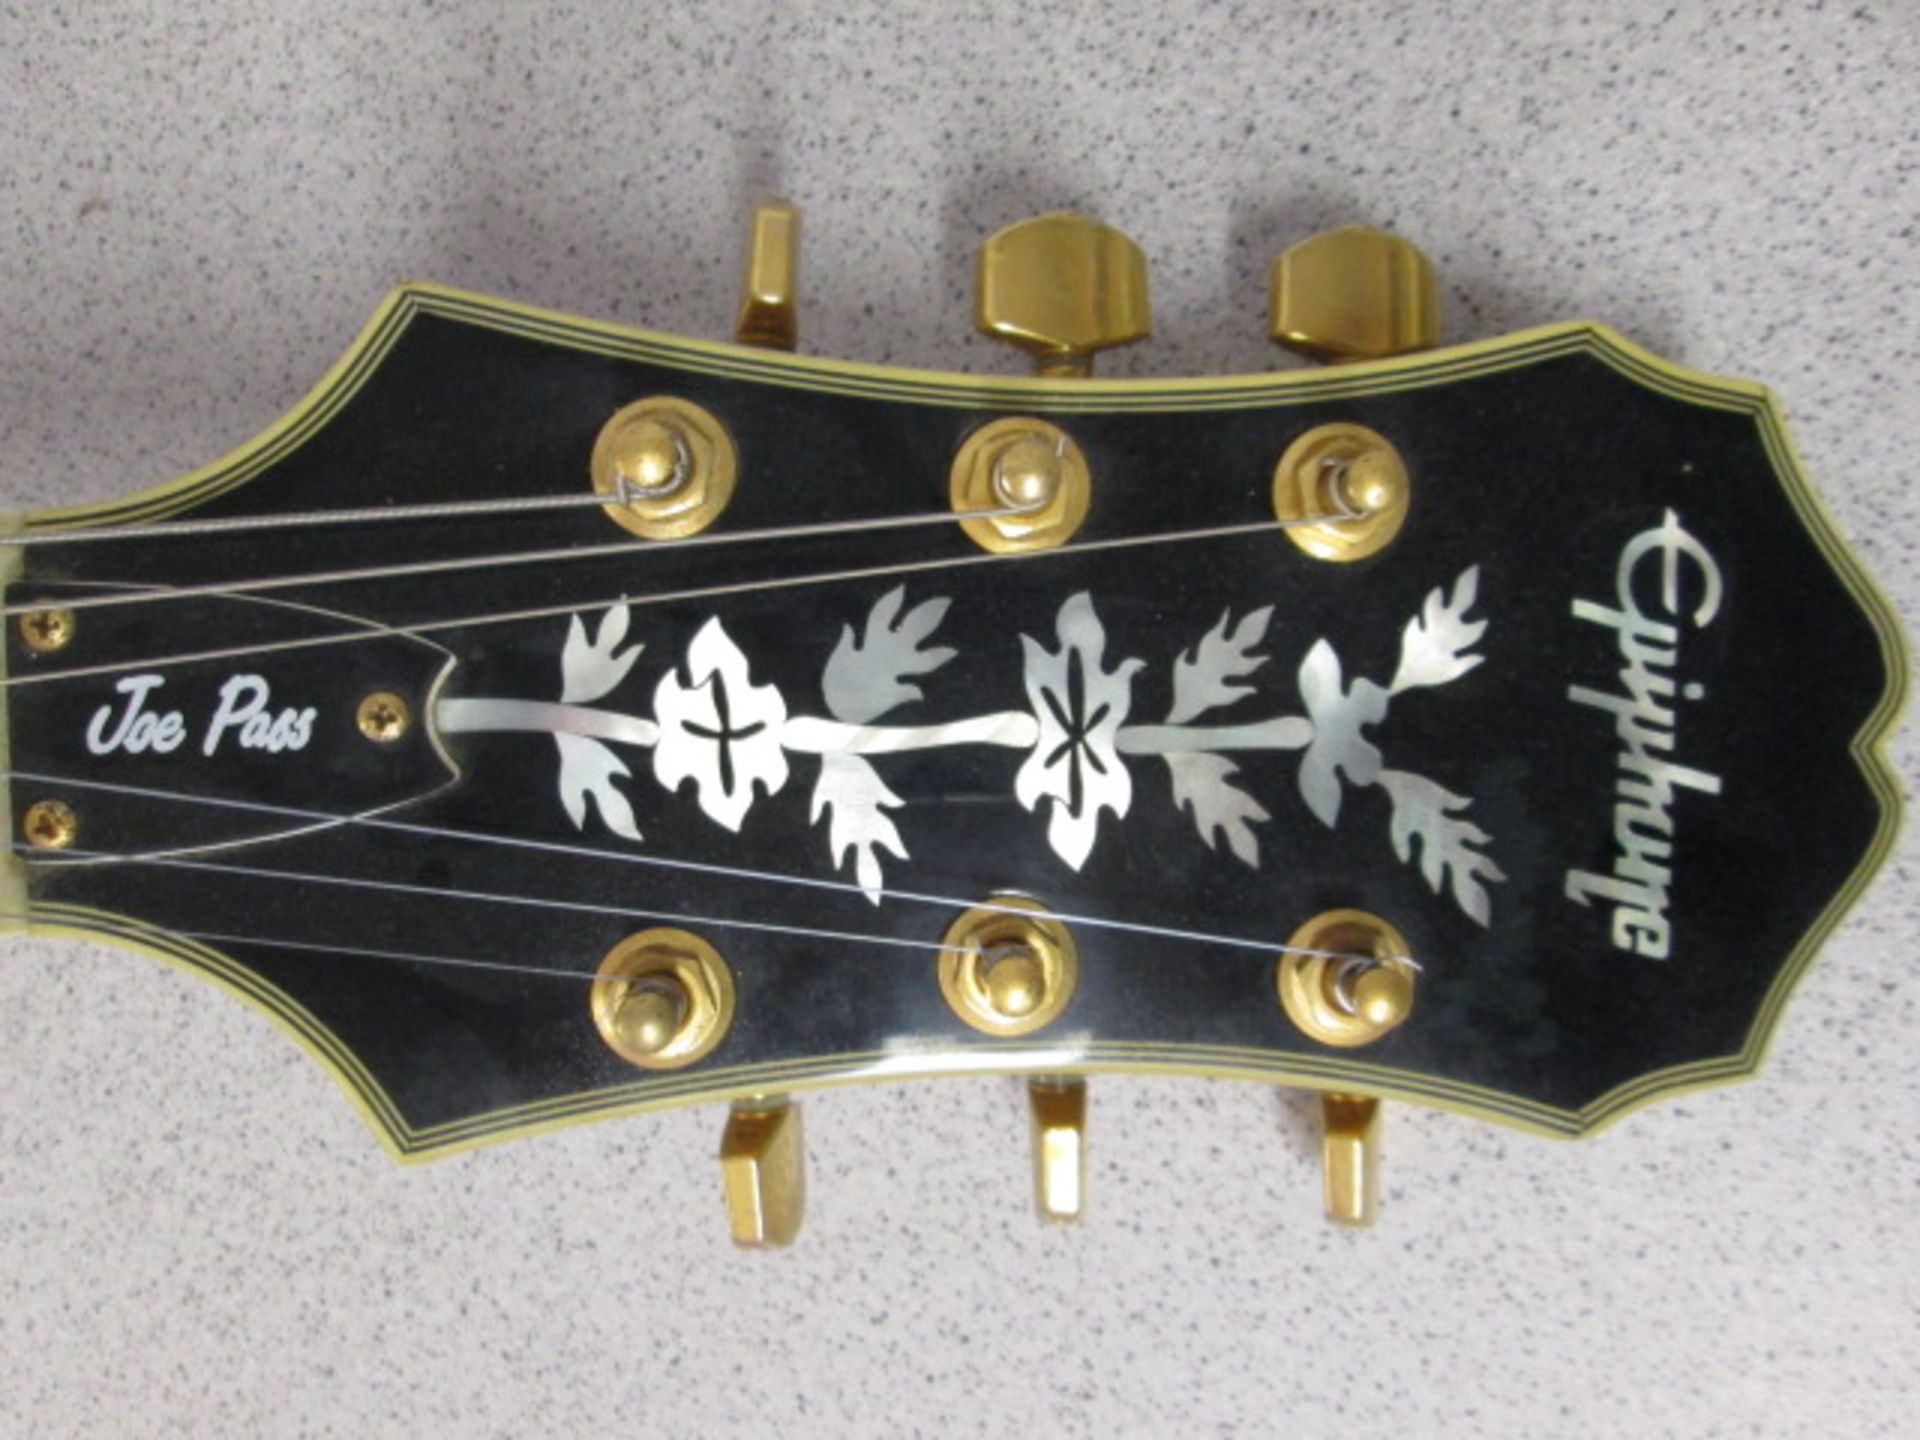 Epiphone Joe Pass Acoustic Guitar - Image 5 of 10